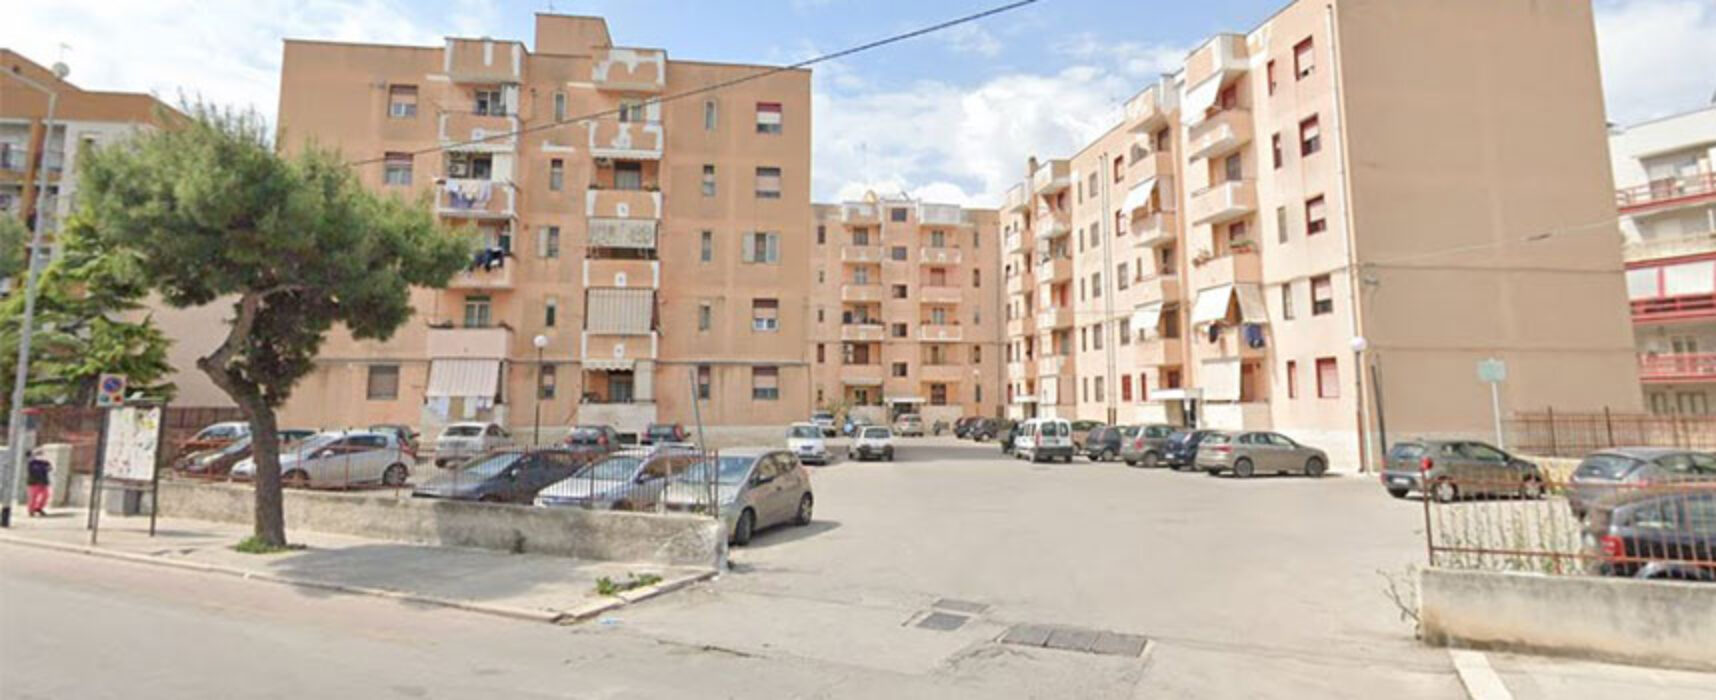 Arca Puglia: stanziati oltre 9 milioni di euro per ristrutturazione case popolari a Bisceglie